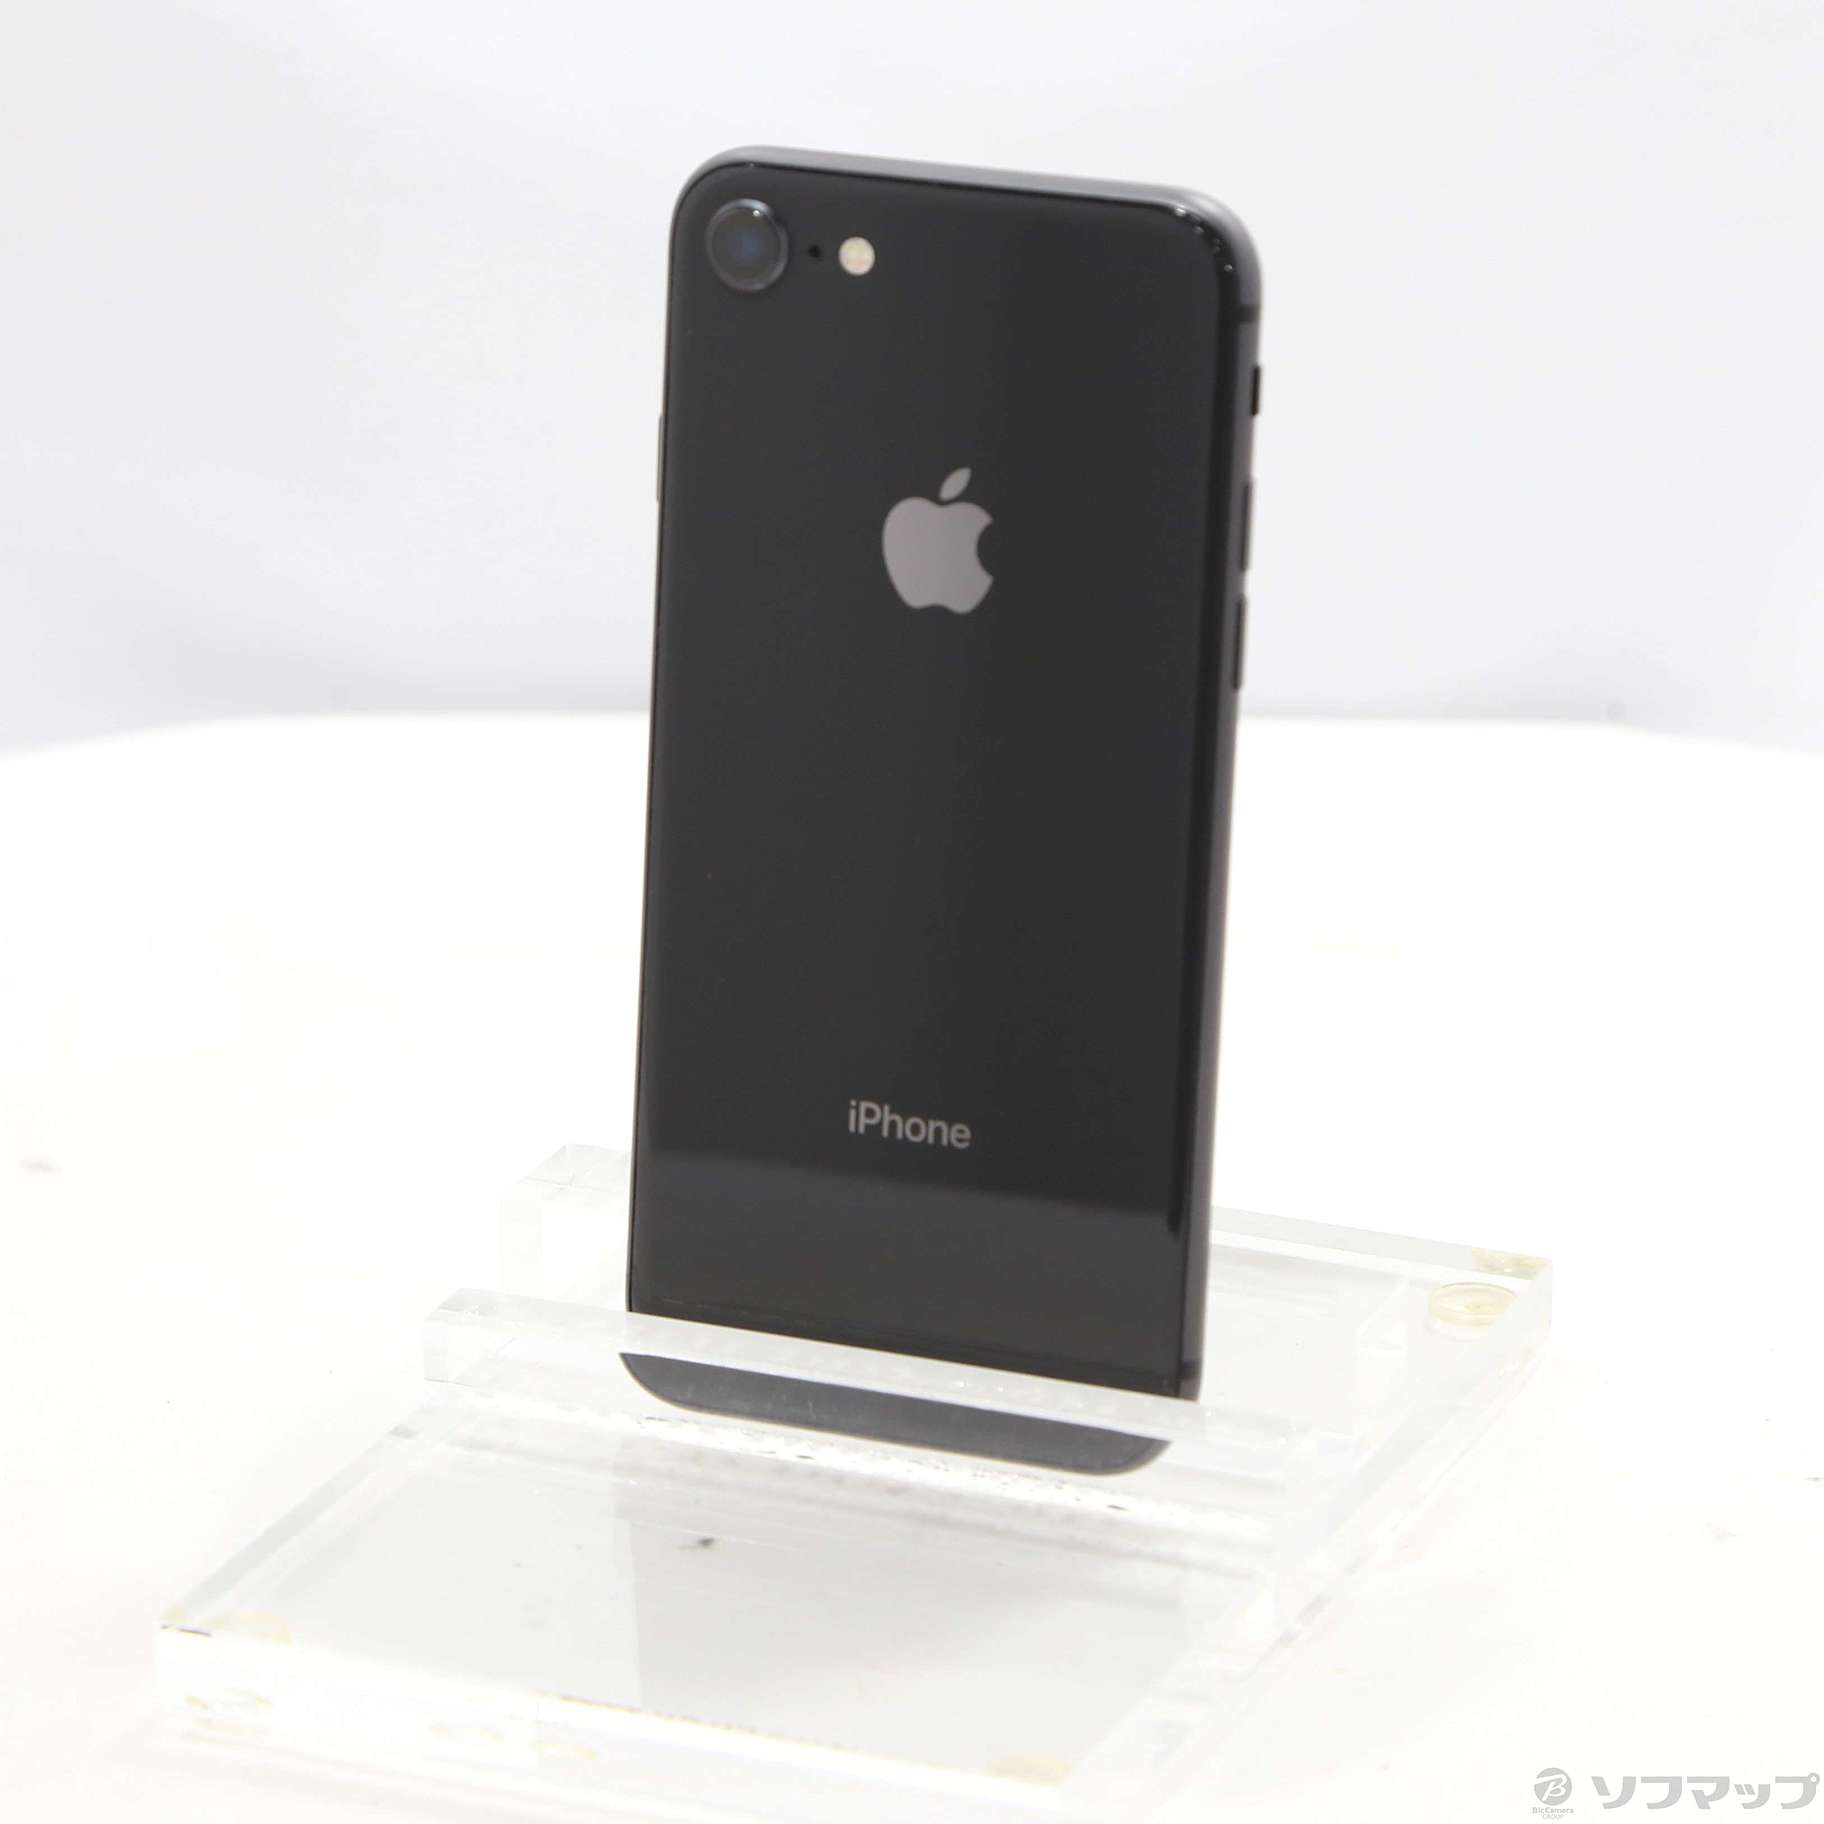 iPhone 8 64gb SIMフリー スペースグレイ